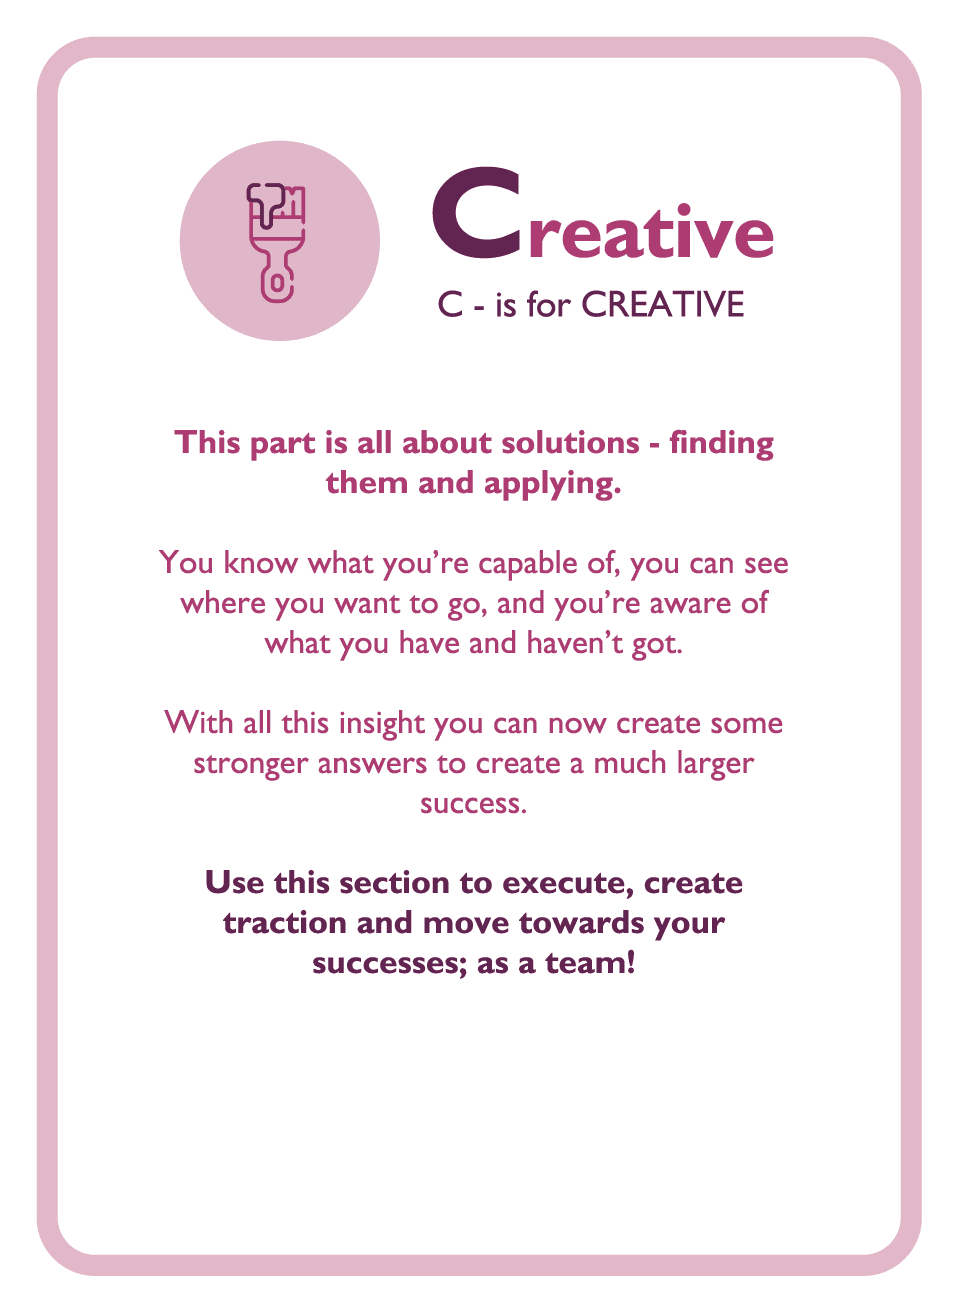 Coaching card titled Creative